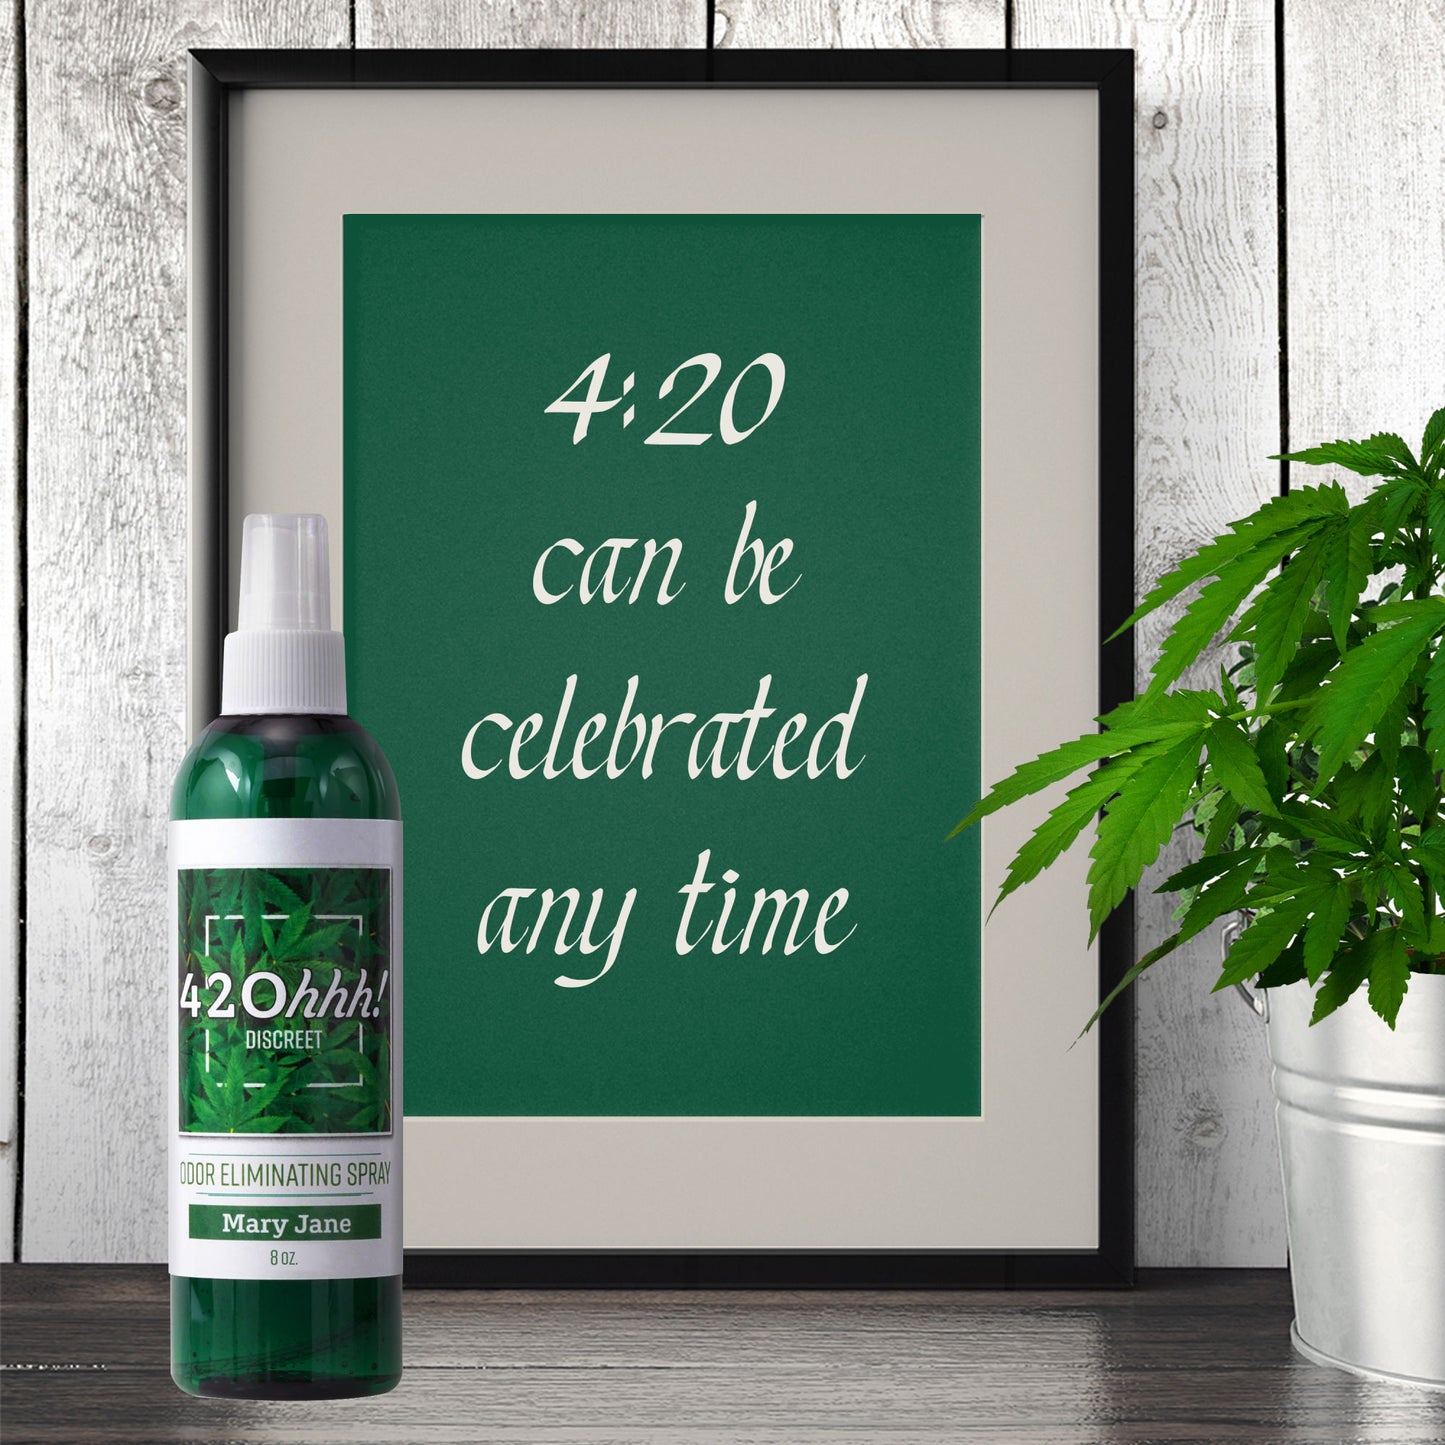 420 Weed Smoke Smell Remover and ALL Smoke Odor Eliminator. 420hhh! Discreetly Reduce and Remove Marijuana Blunt Odor.